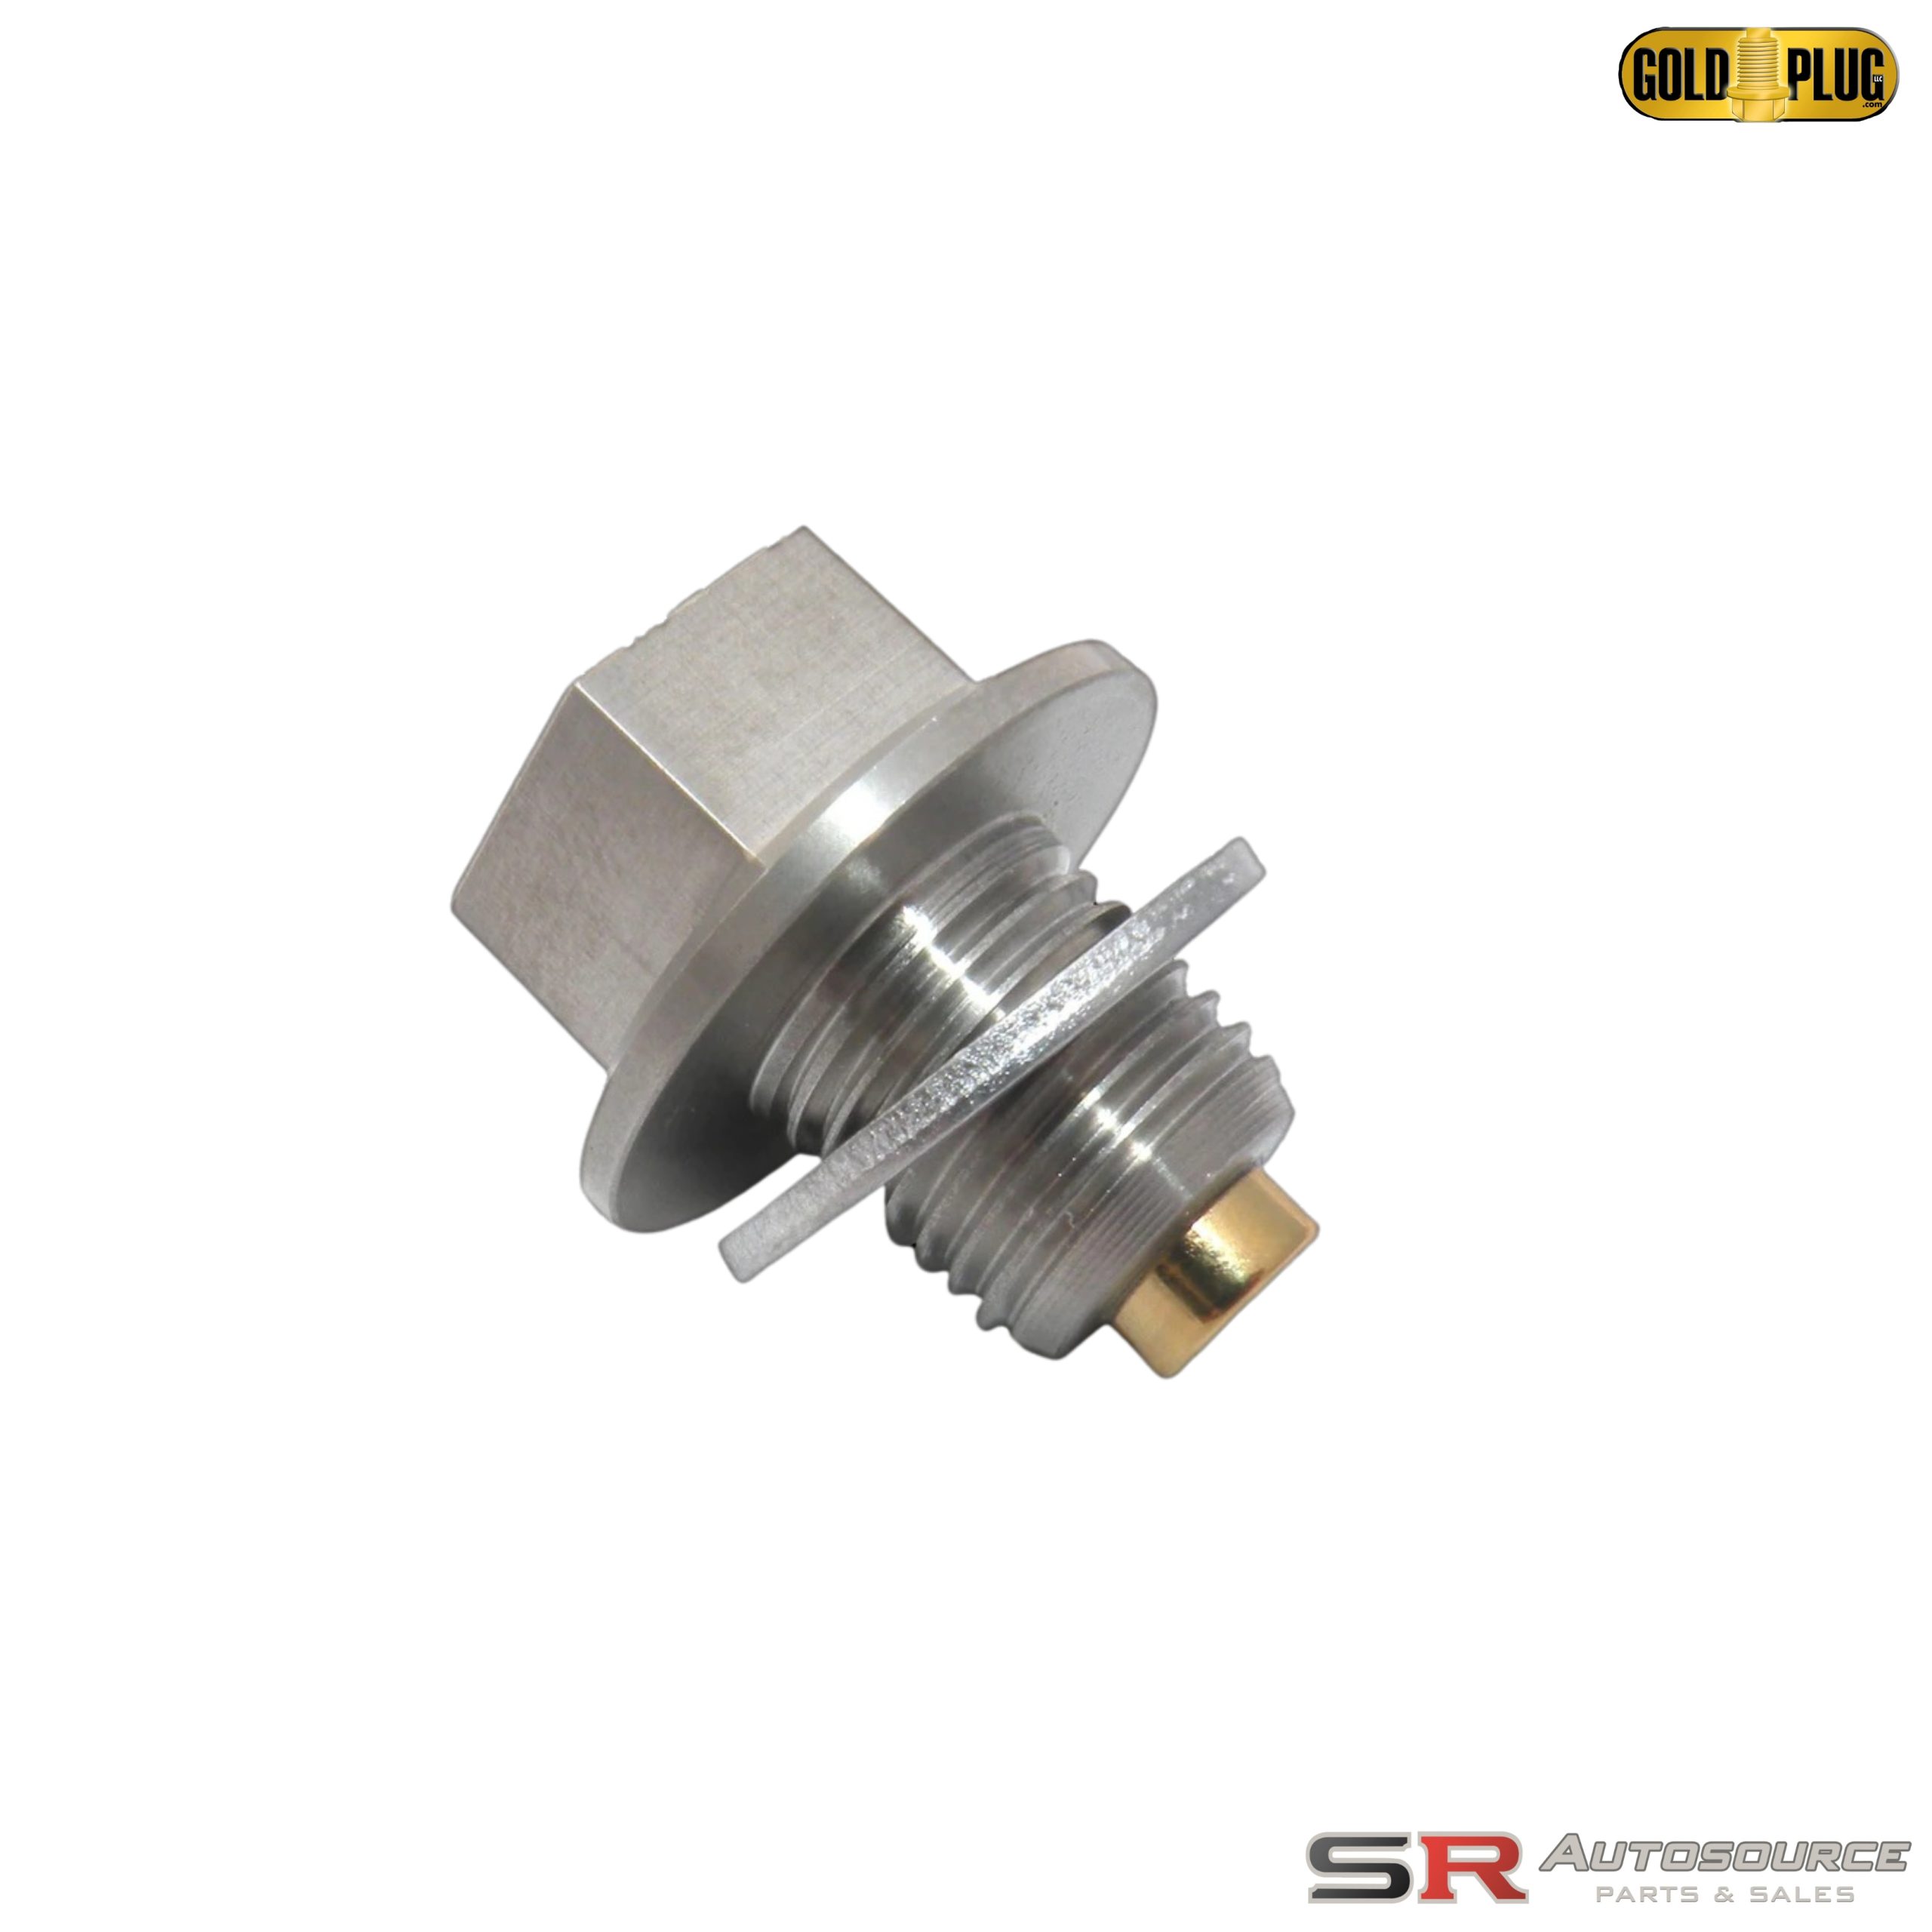 GoldPlug Magnetic Drain Plug for SR and RB Engines